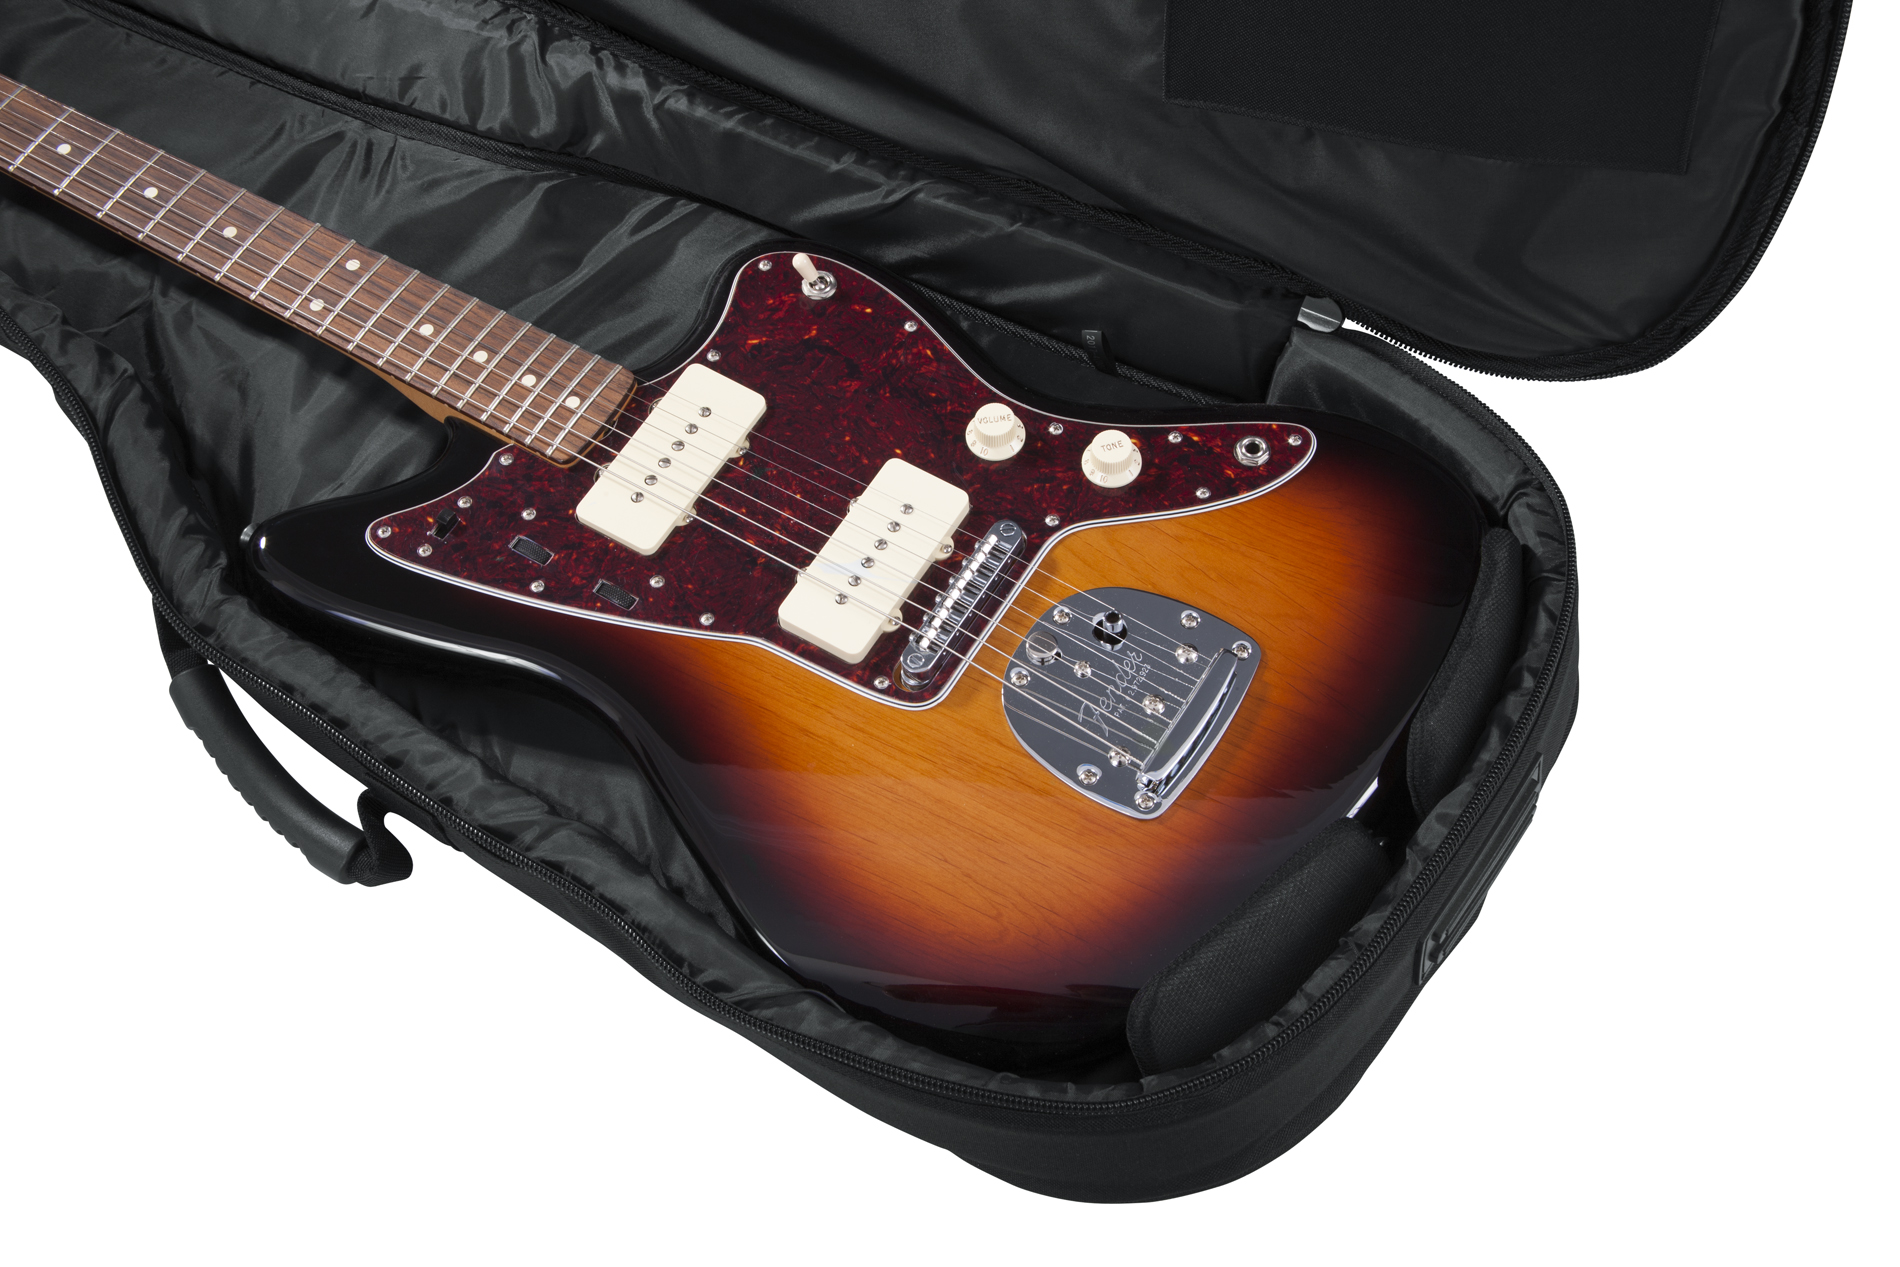 4G Series Gig Bag for Jazzmaster Guitar